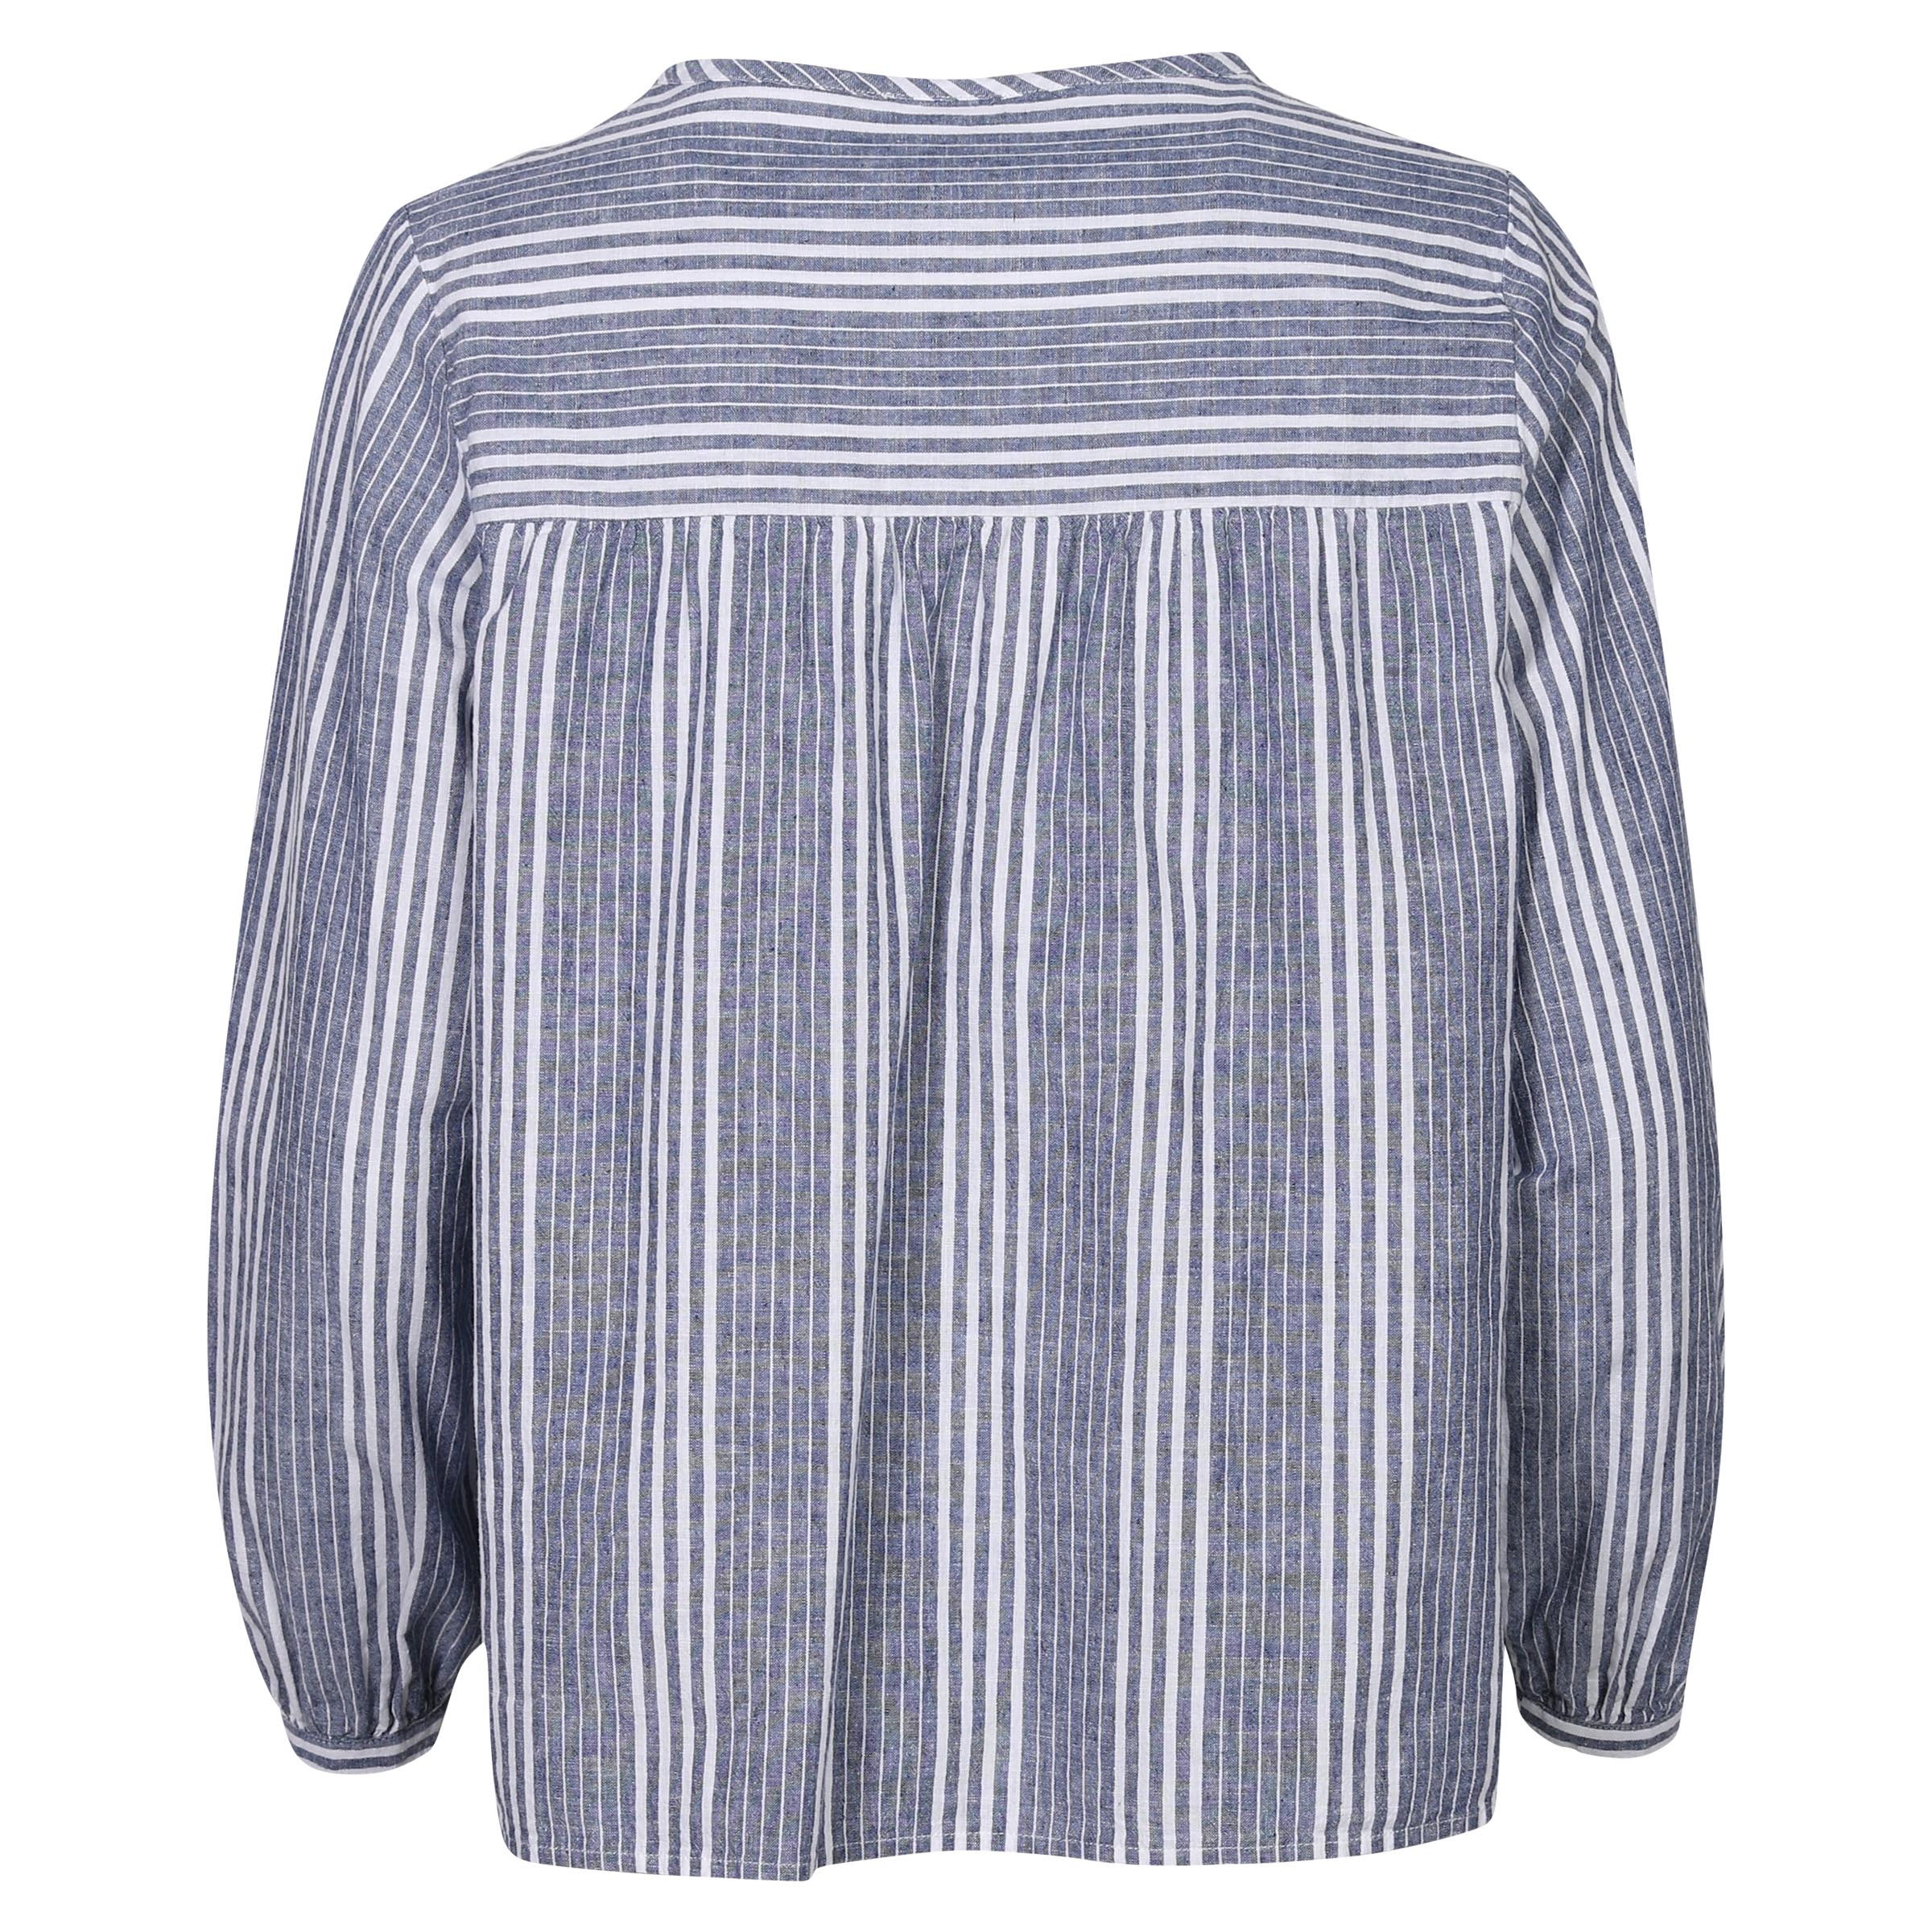 Woolrich Organic Blouse Striped Blue/White